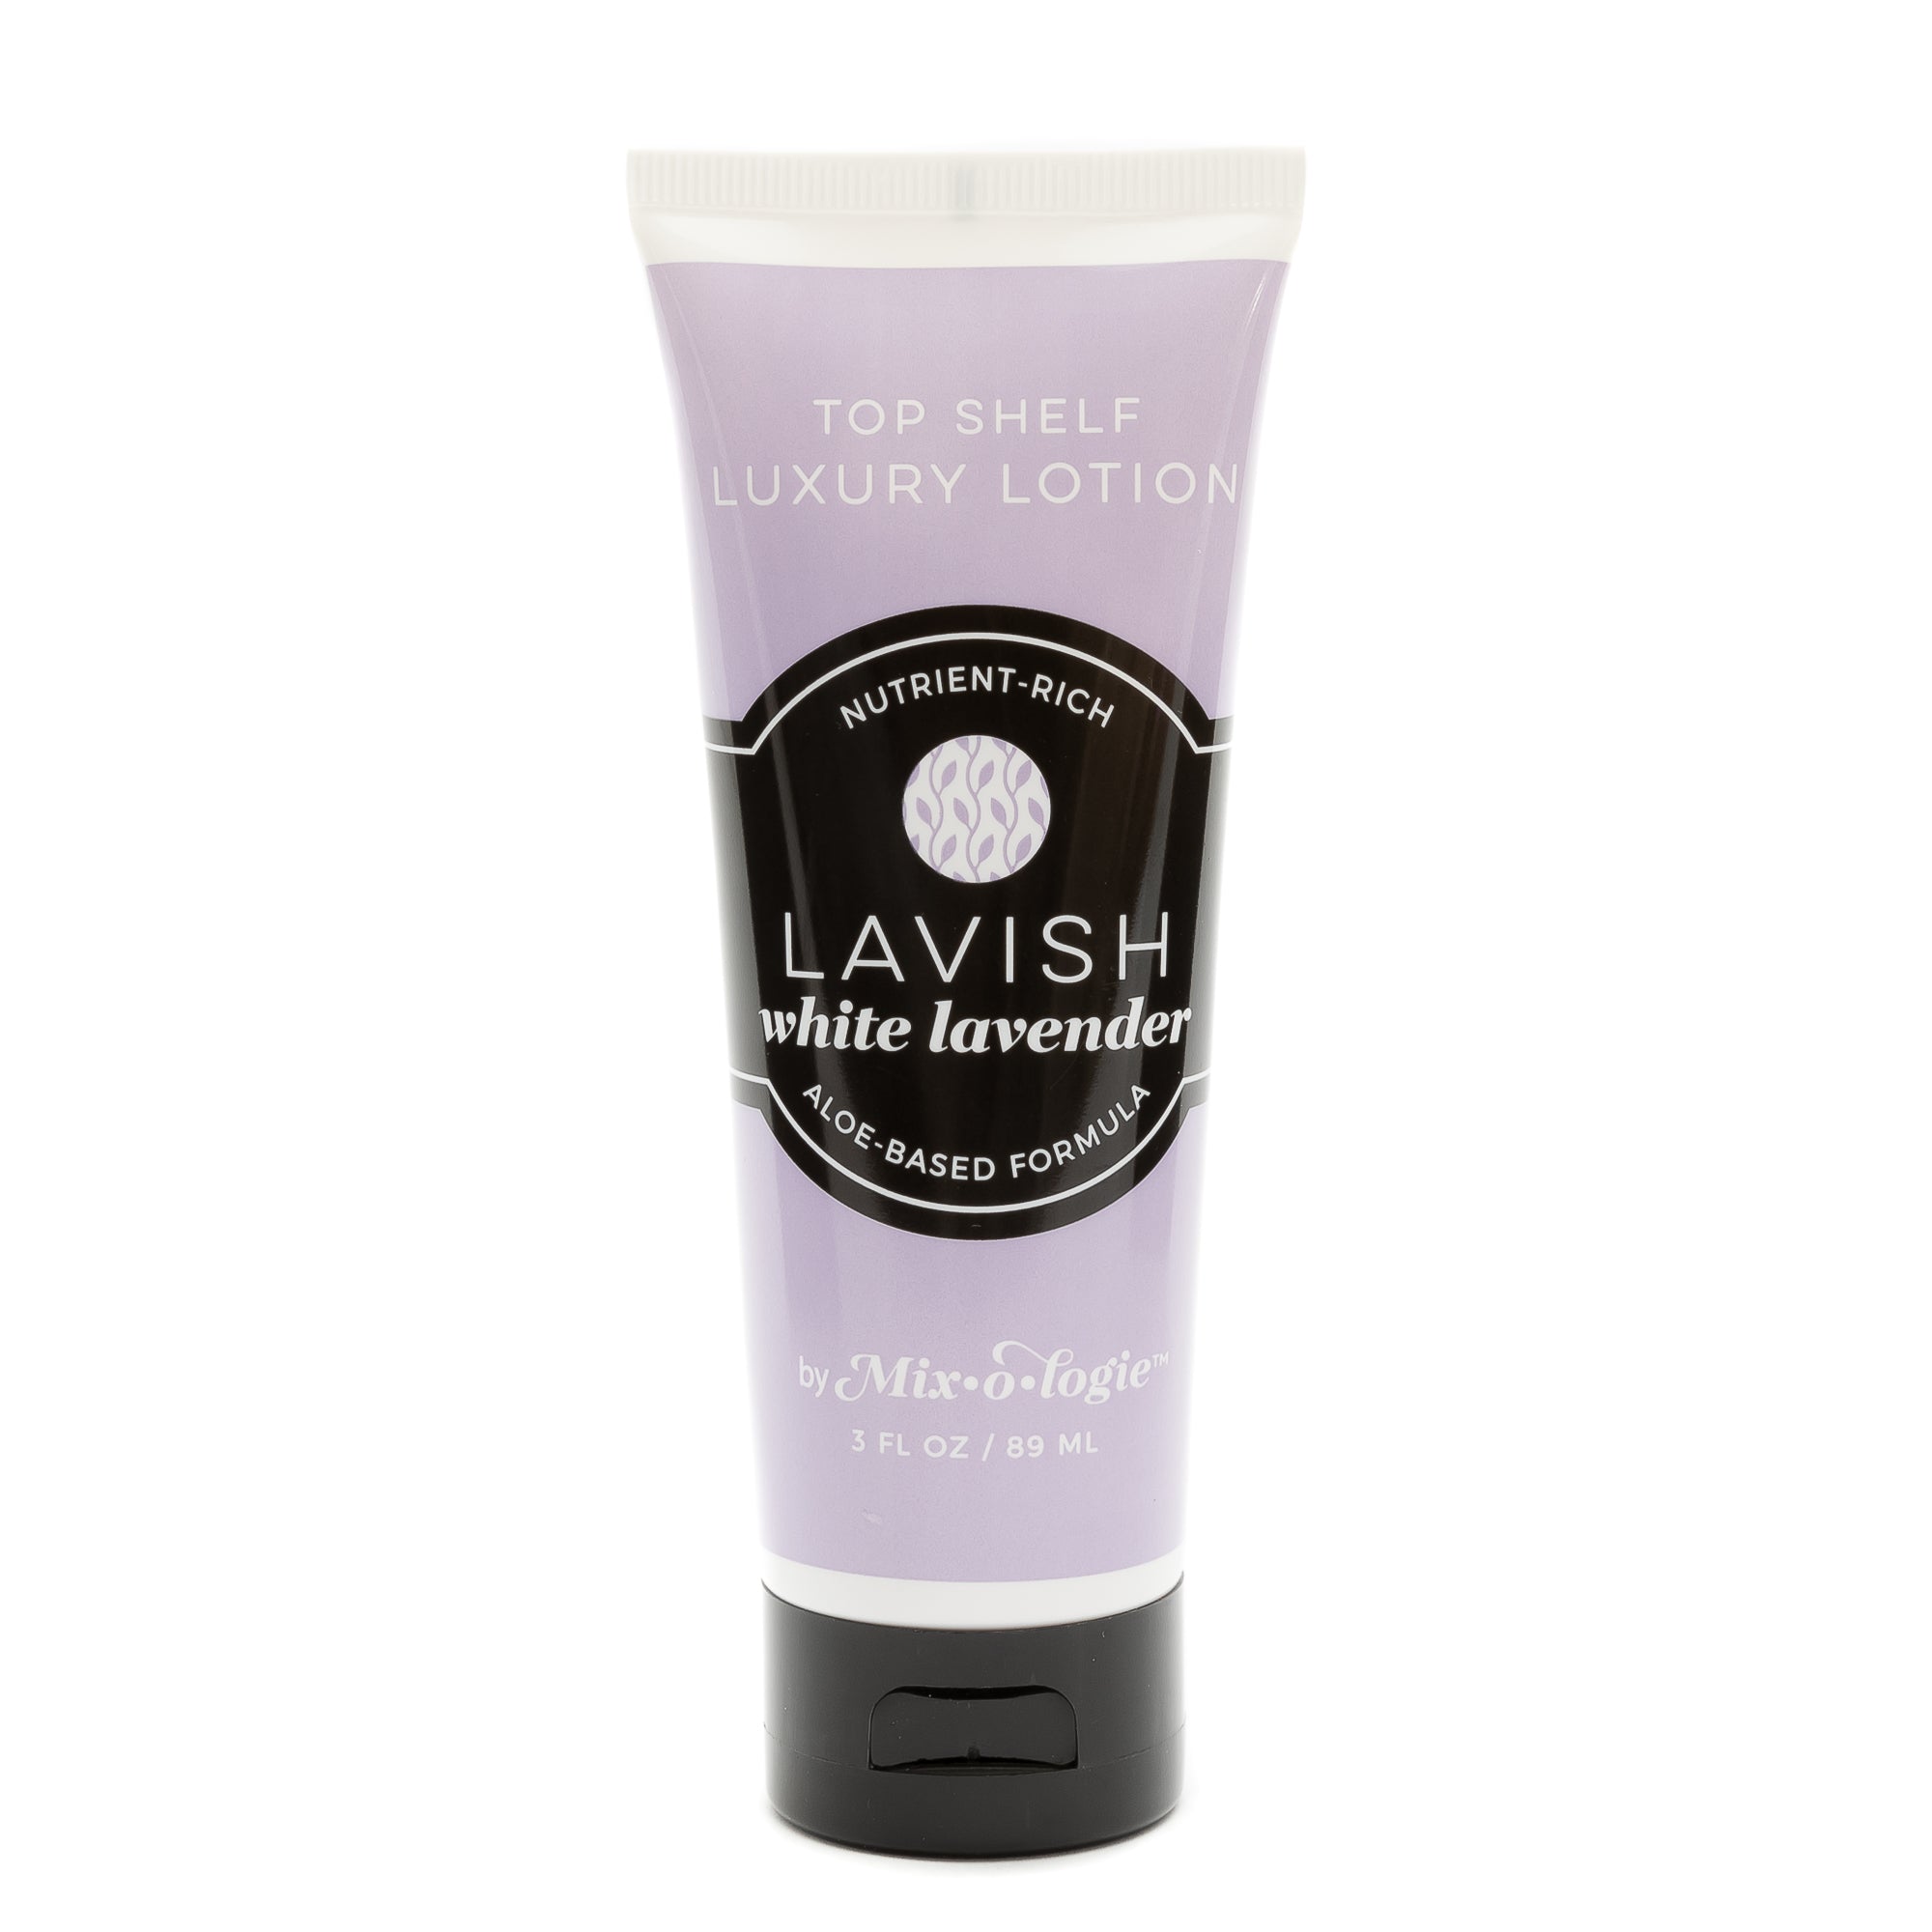 Lavish (white lavender) - Top Shelf Luxury Lotion